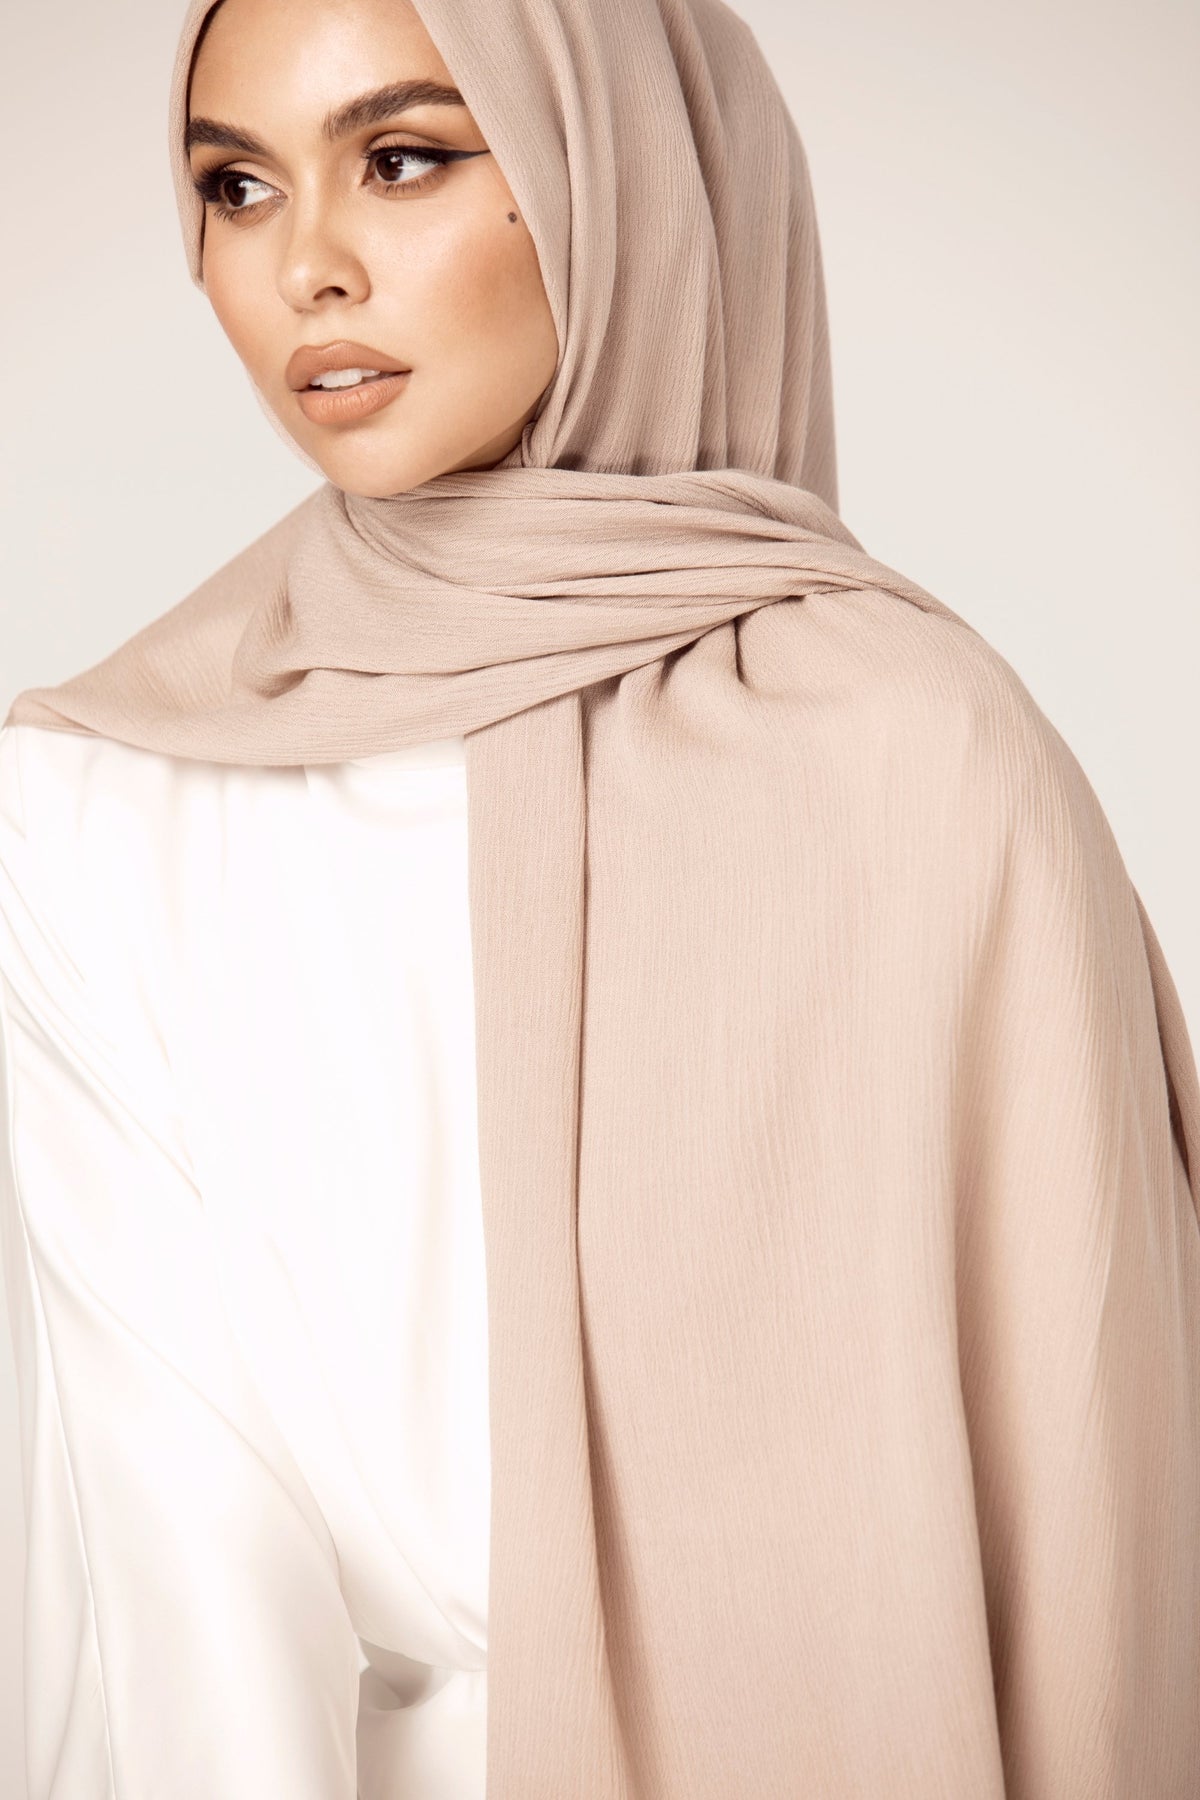 Premium Rayon Hijab - Light Caffe epschoolboard 